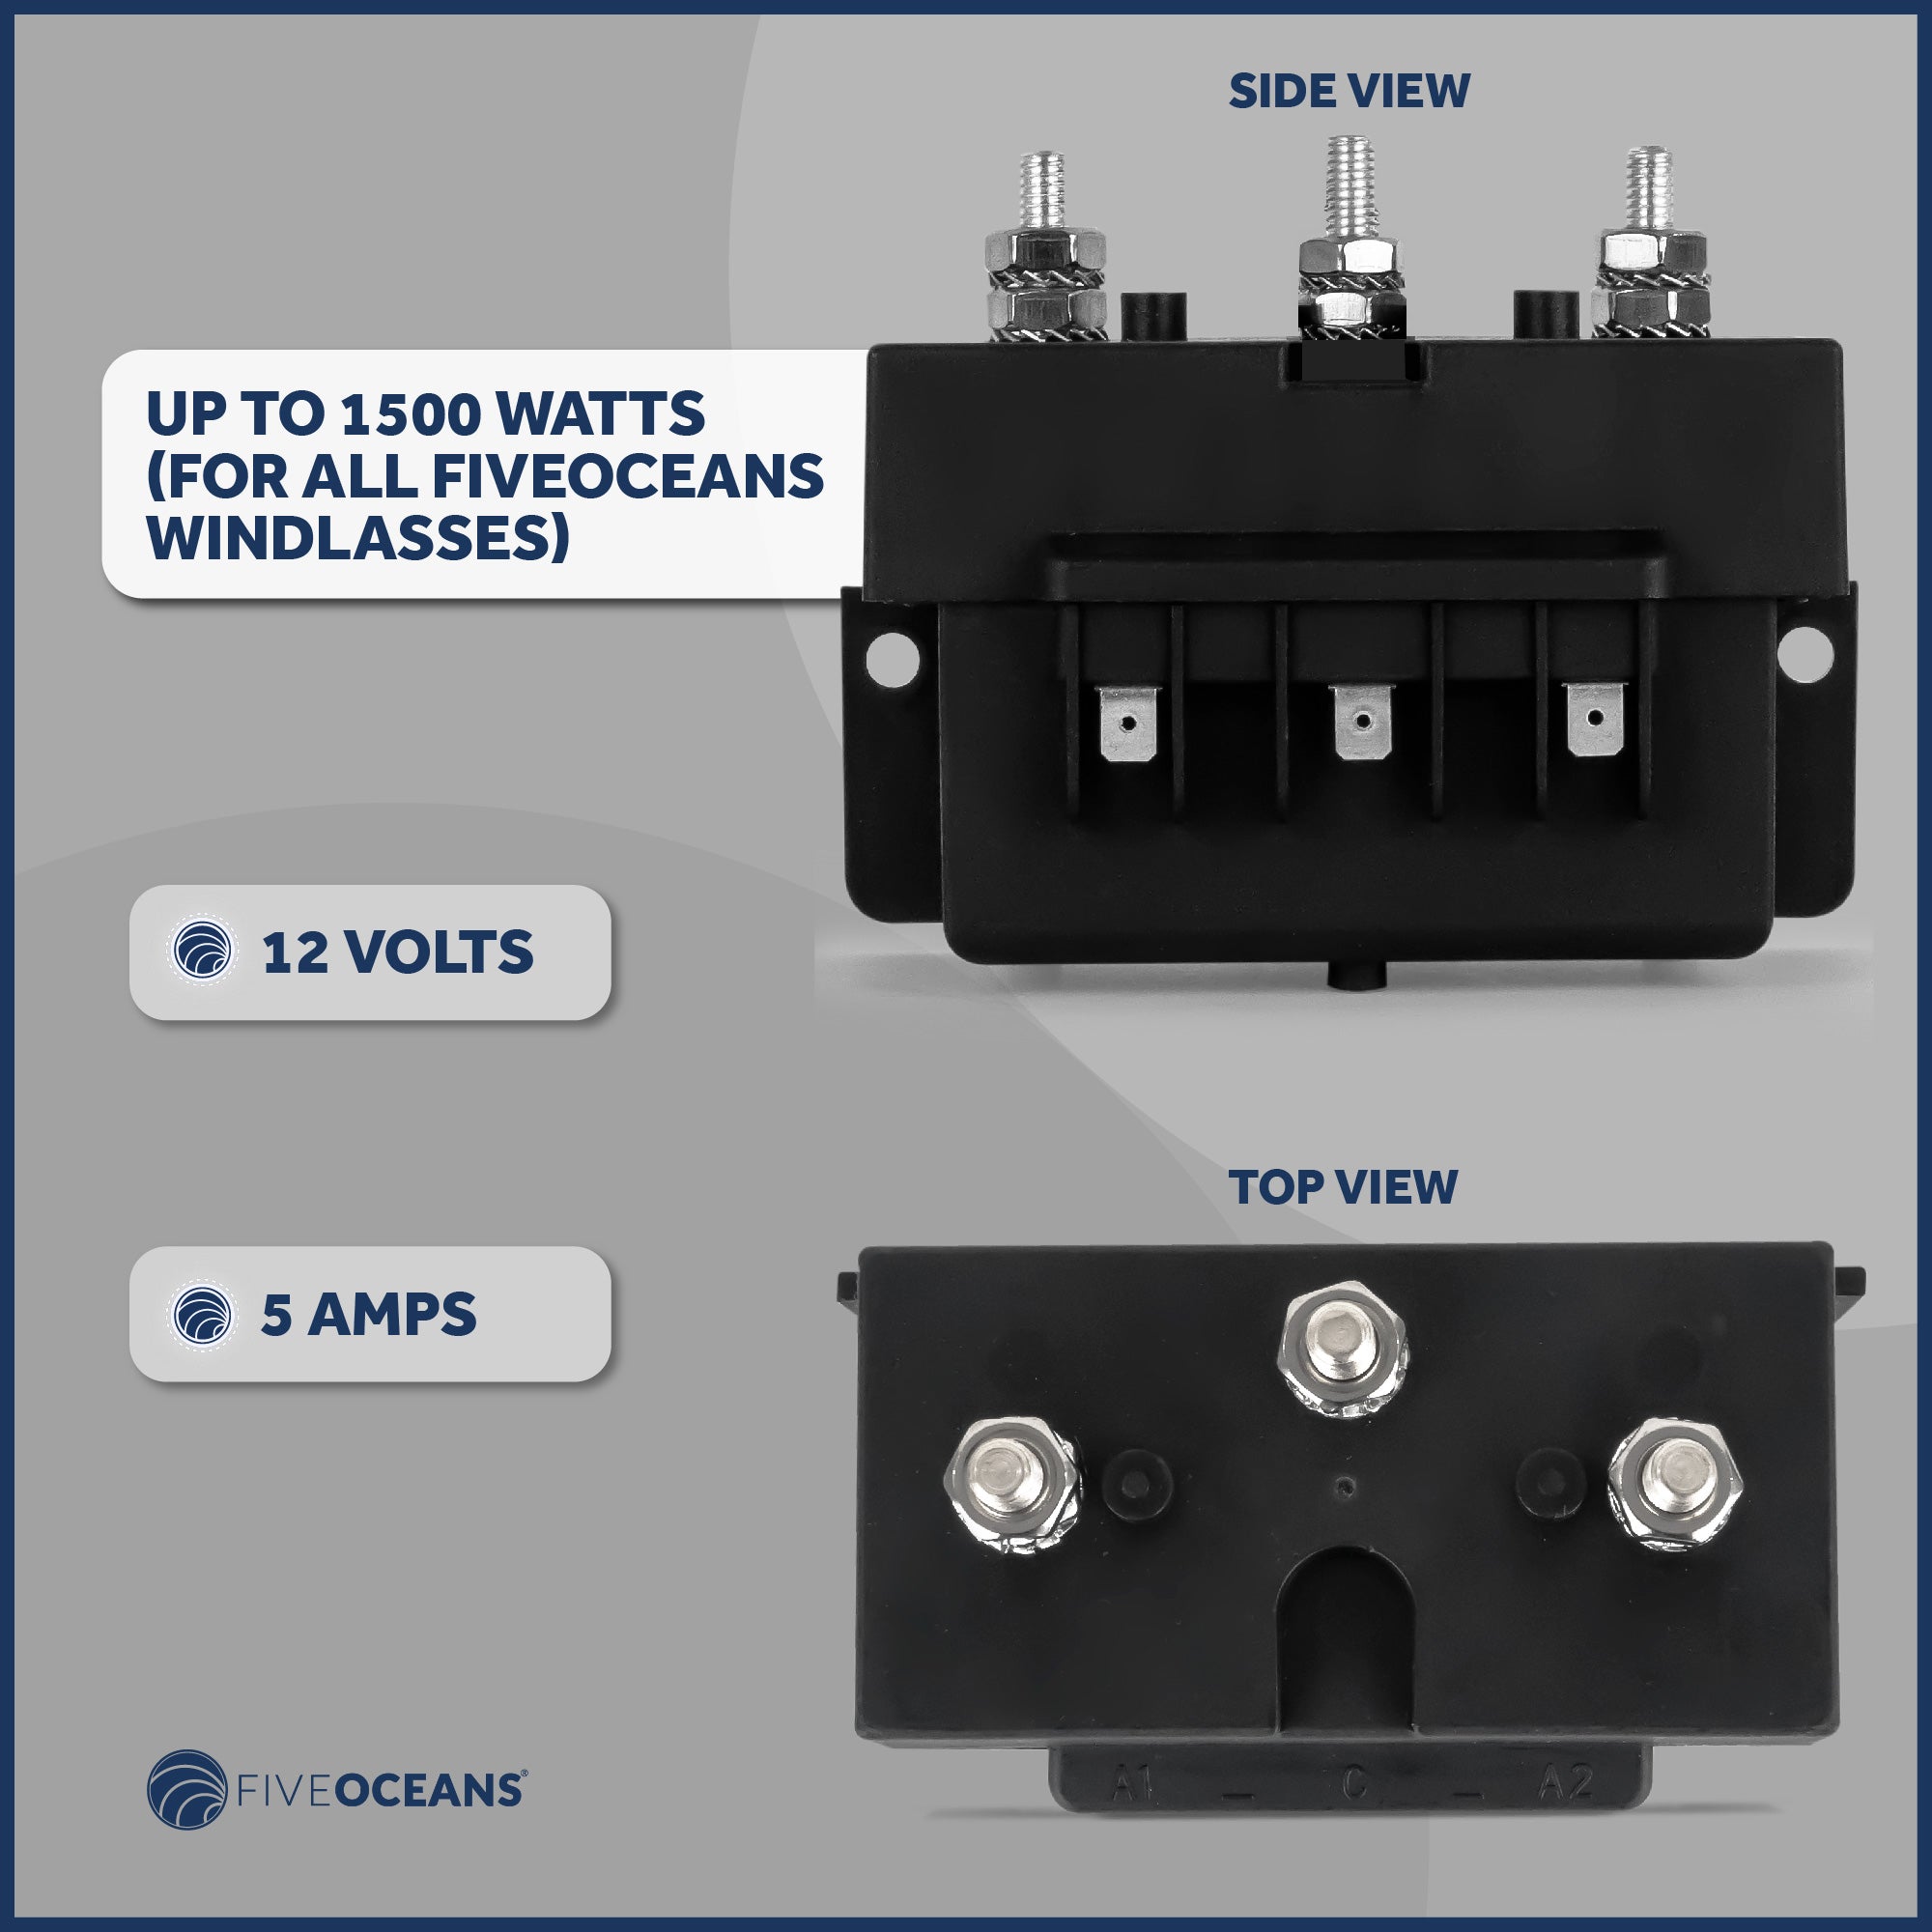 Windlass Solenoid, Control Box 3-Wire Motors, 12V, Up To 1500 Watts - FO3293